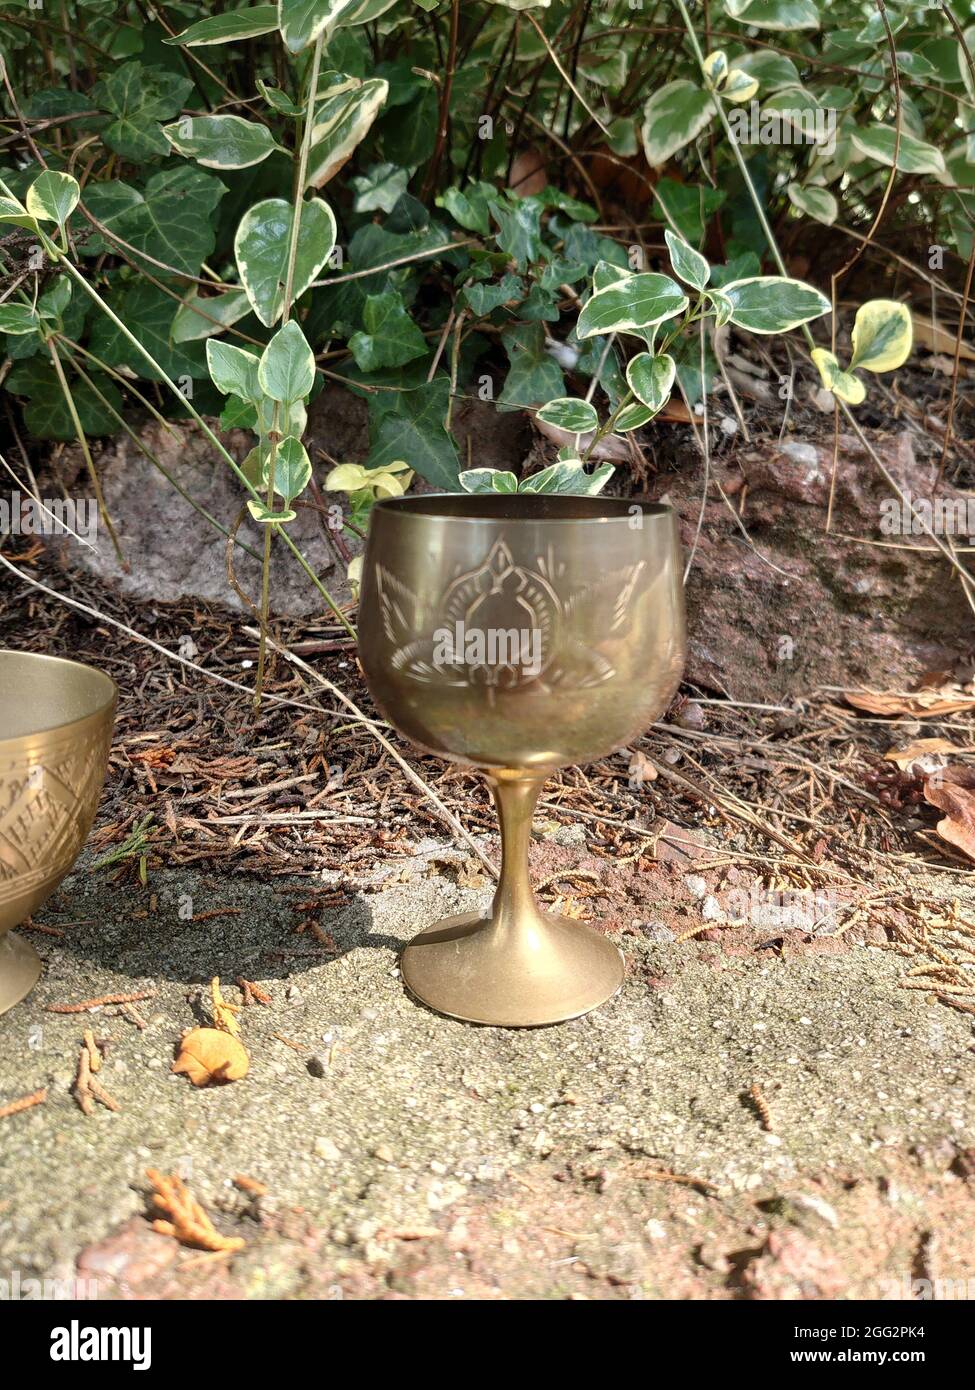 https://c8.alamy.com/comp/2GG2PK4/closeup-shot-of-a-vintage-brass-goblet-standing-on-the-ground-2GG2PK4.jpg